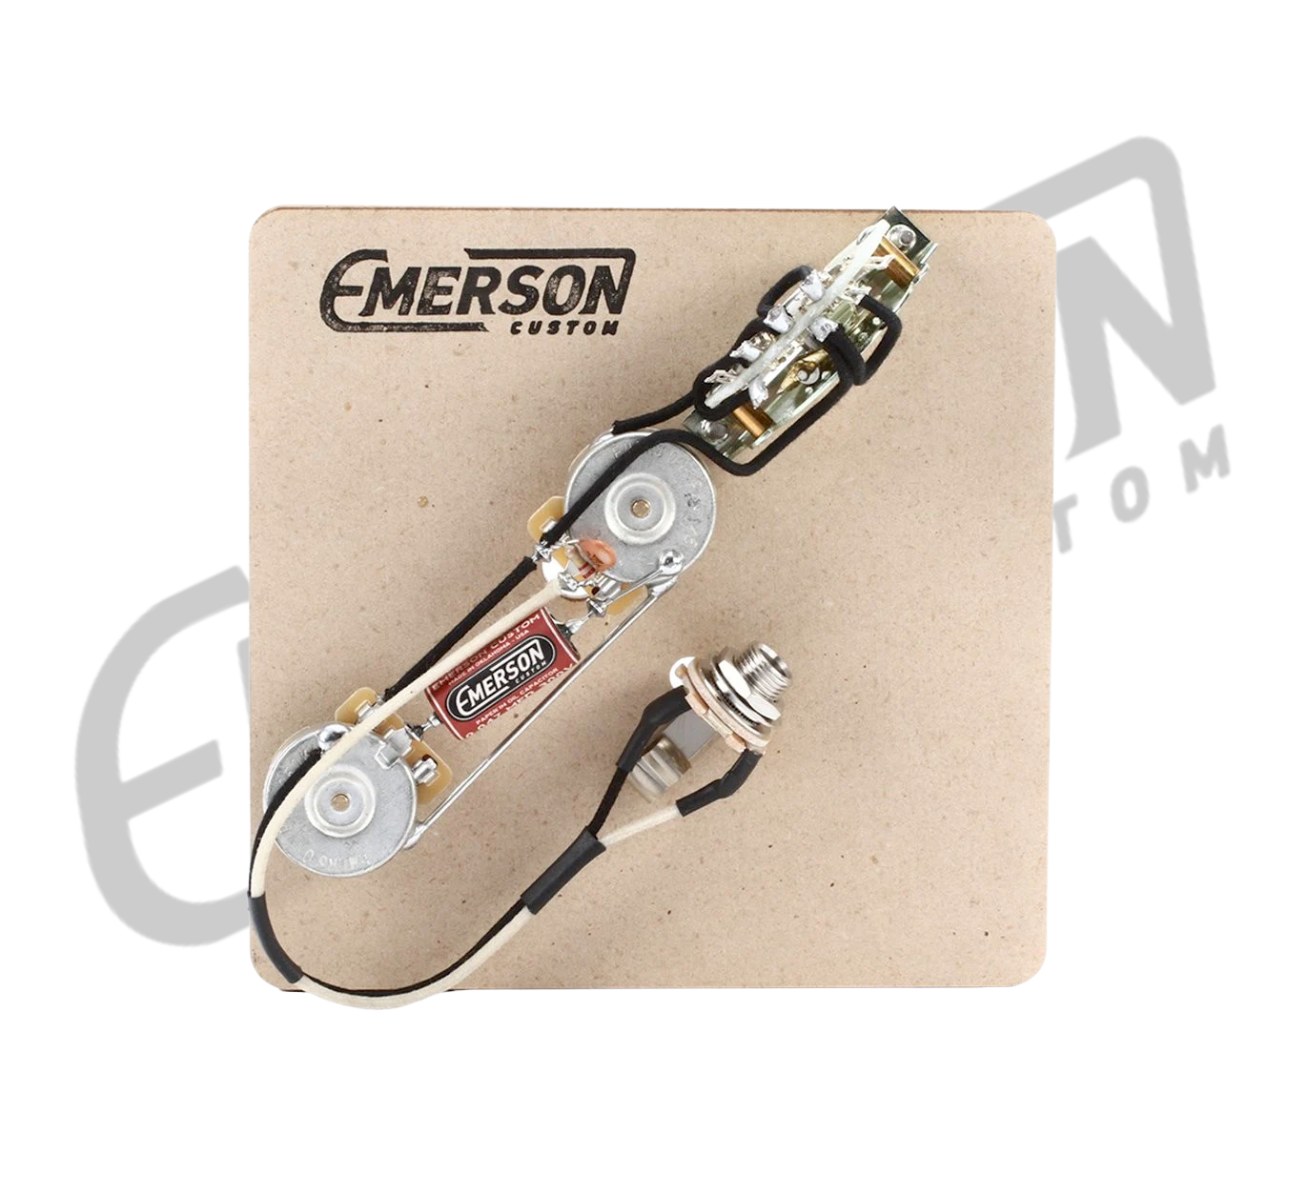 Emerson Custom 4-way Prewired Kit for Telecaster Guitars - 250k Pots